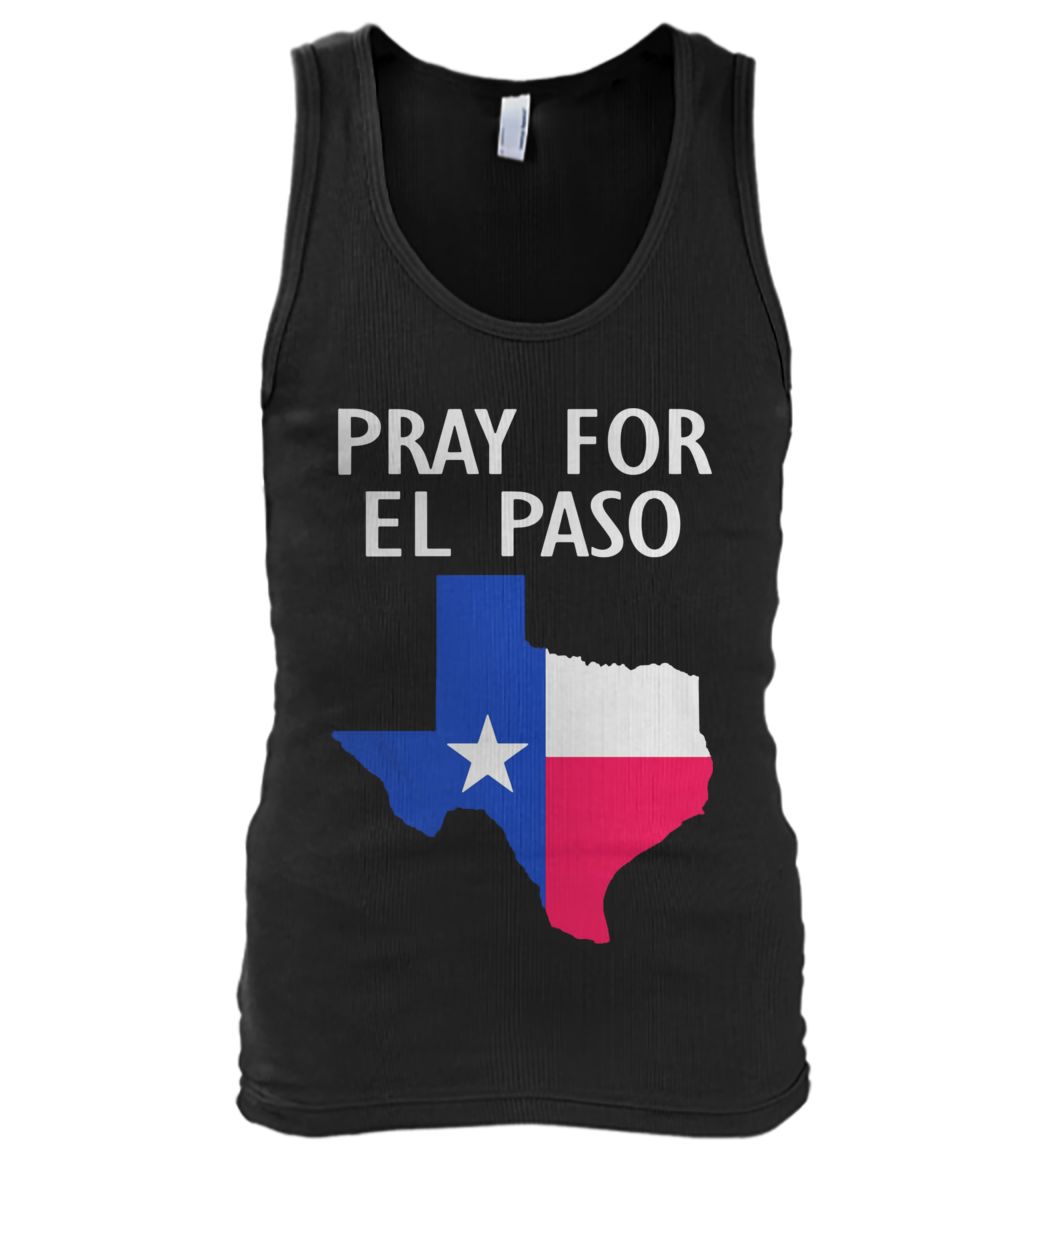 Pray for el paso texas flag men's tank top